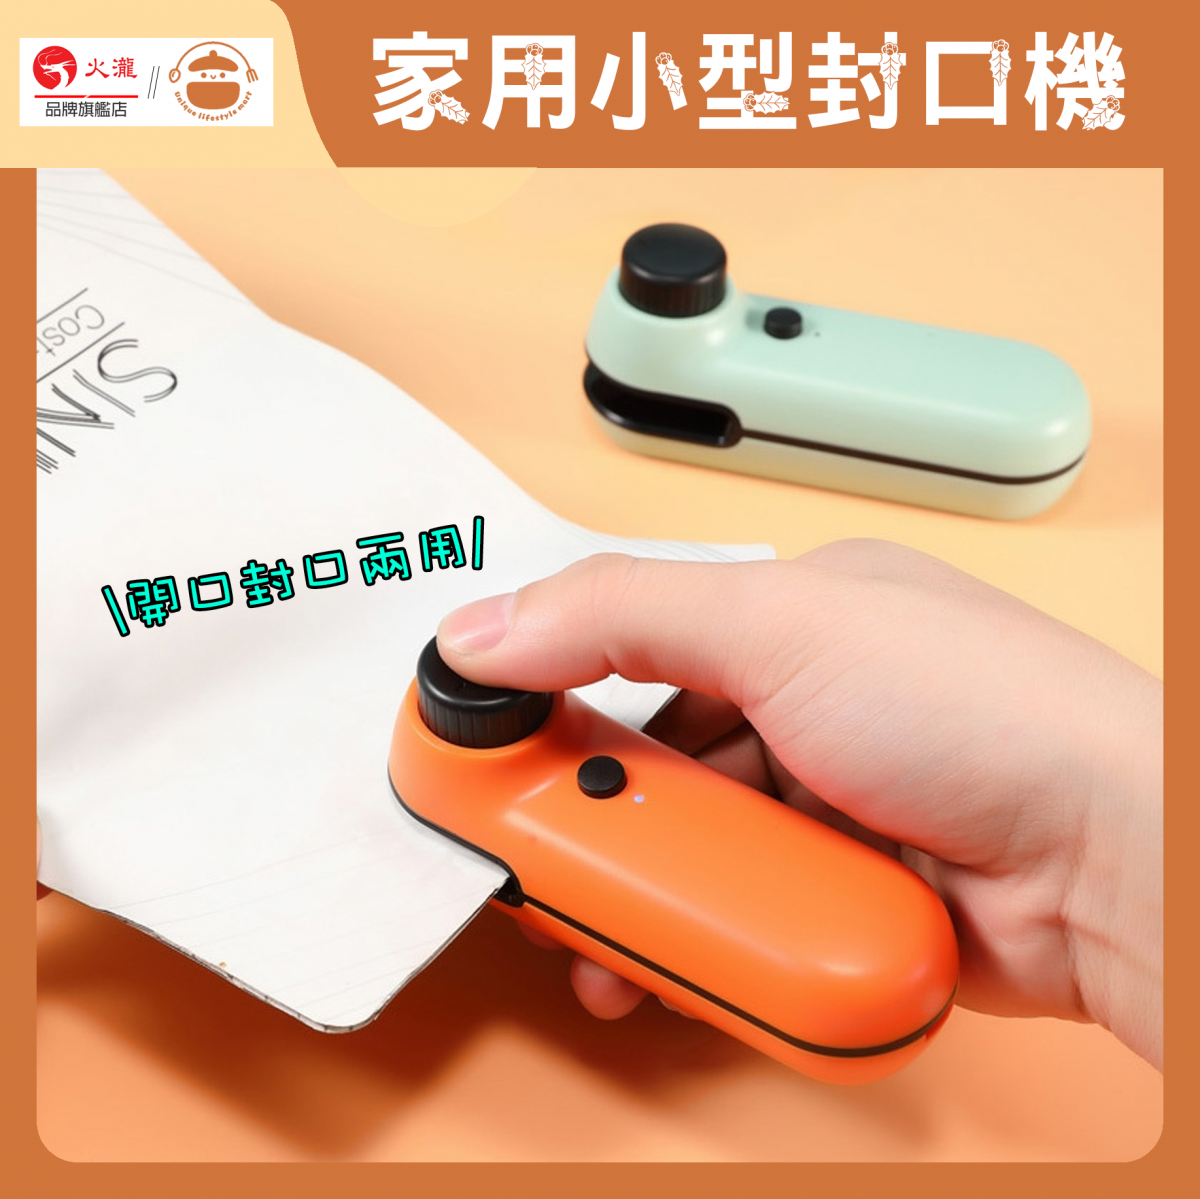 USB Rechargeable Household Mini Sealer - Mini Heat Sealer | Moisture Proof Sealer | Snack Sealing Tool